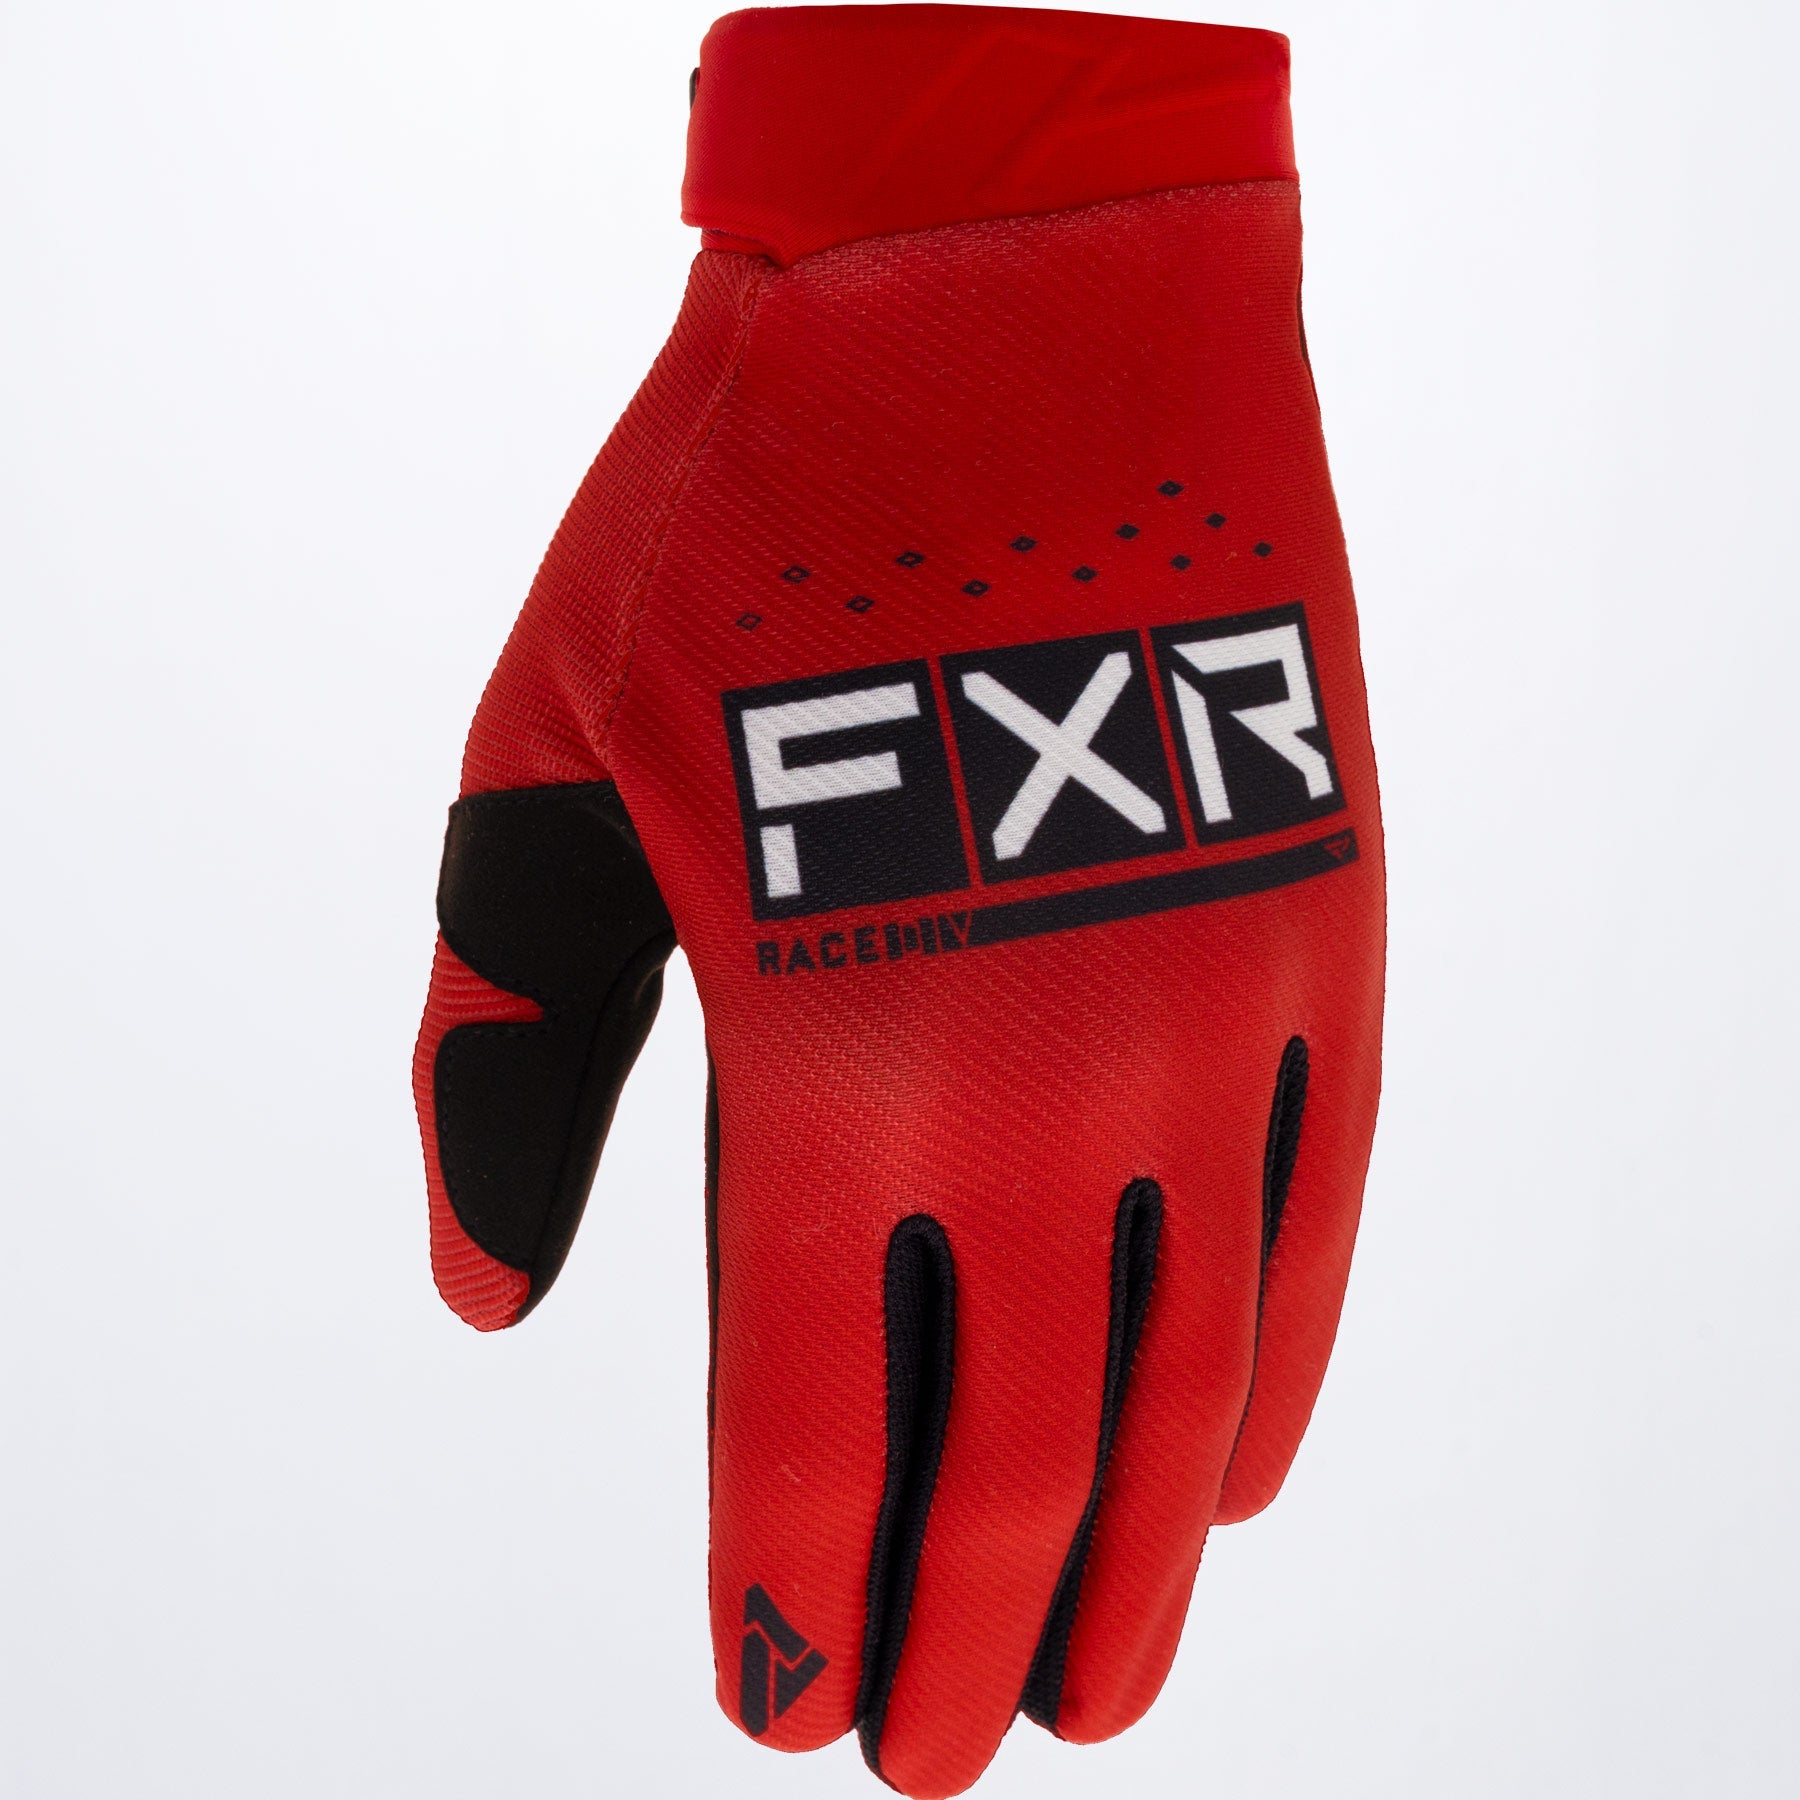 FXR Racing – Tagged 